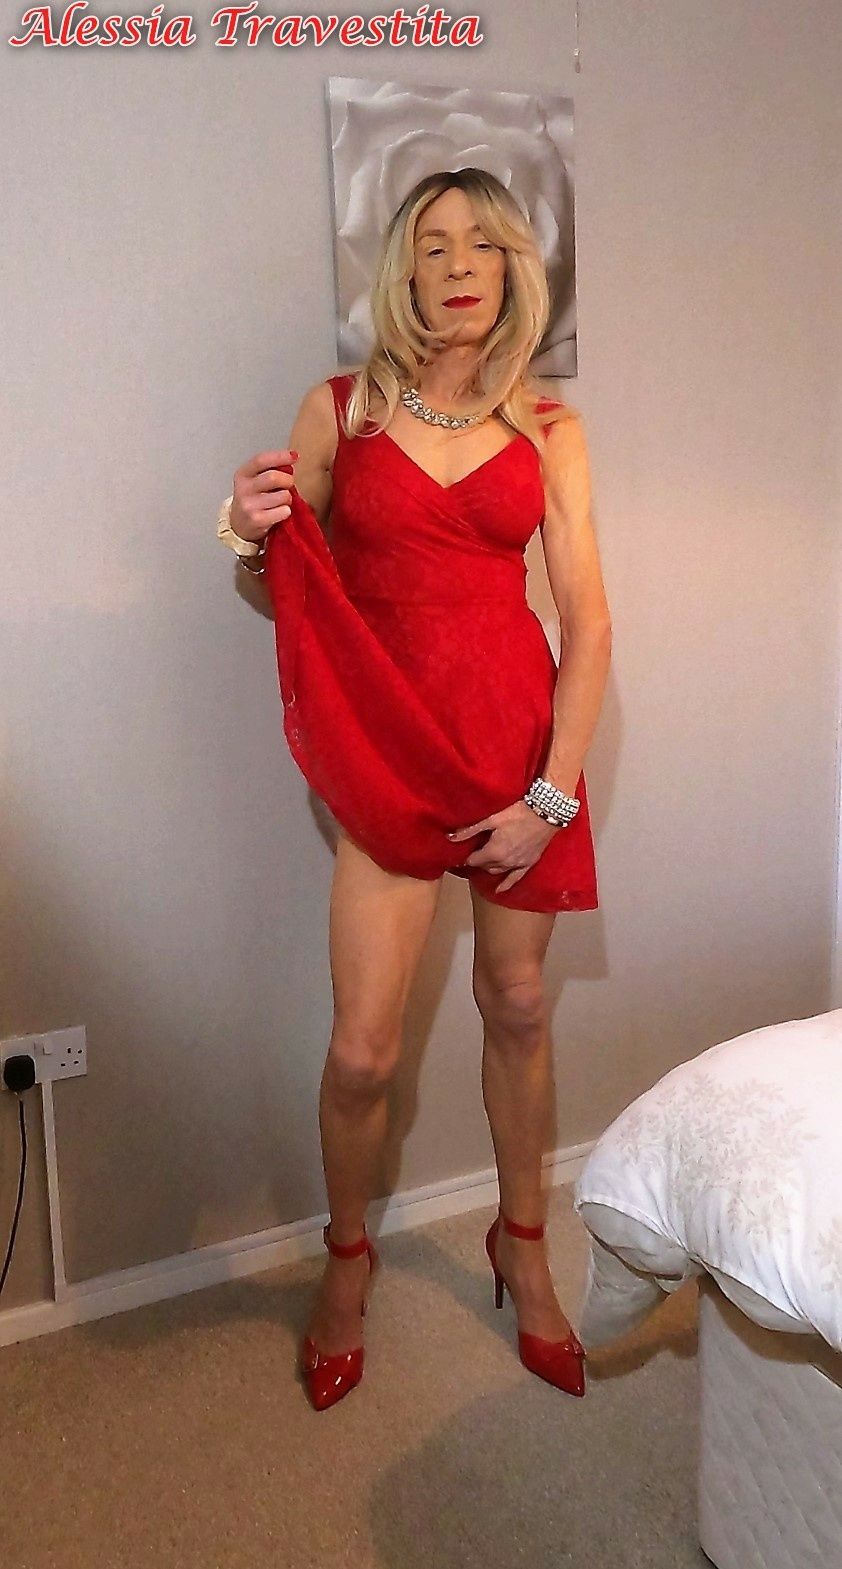 65 Alessia Travestita in Flirty Red Dress